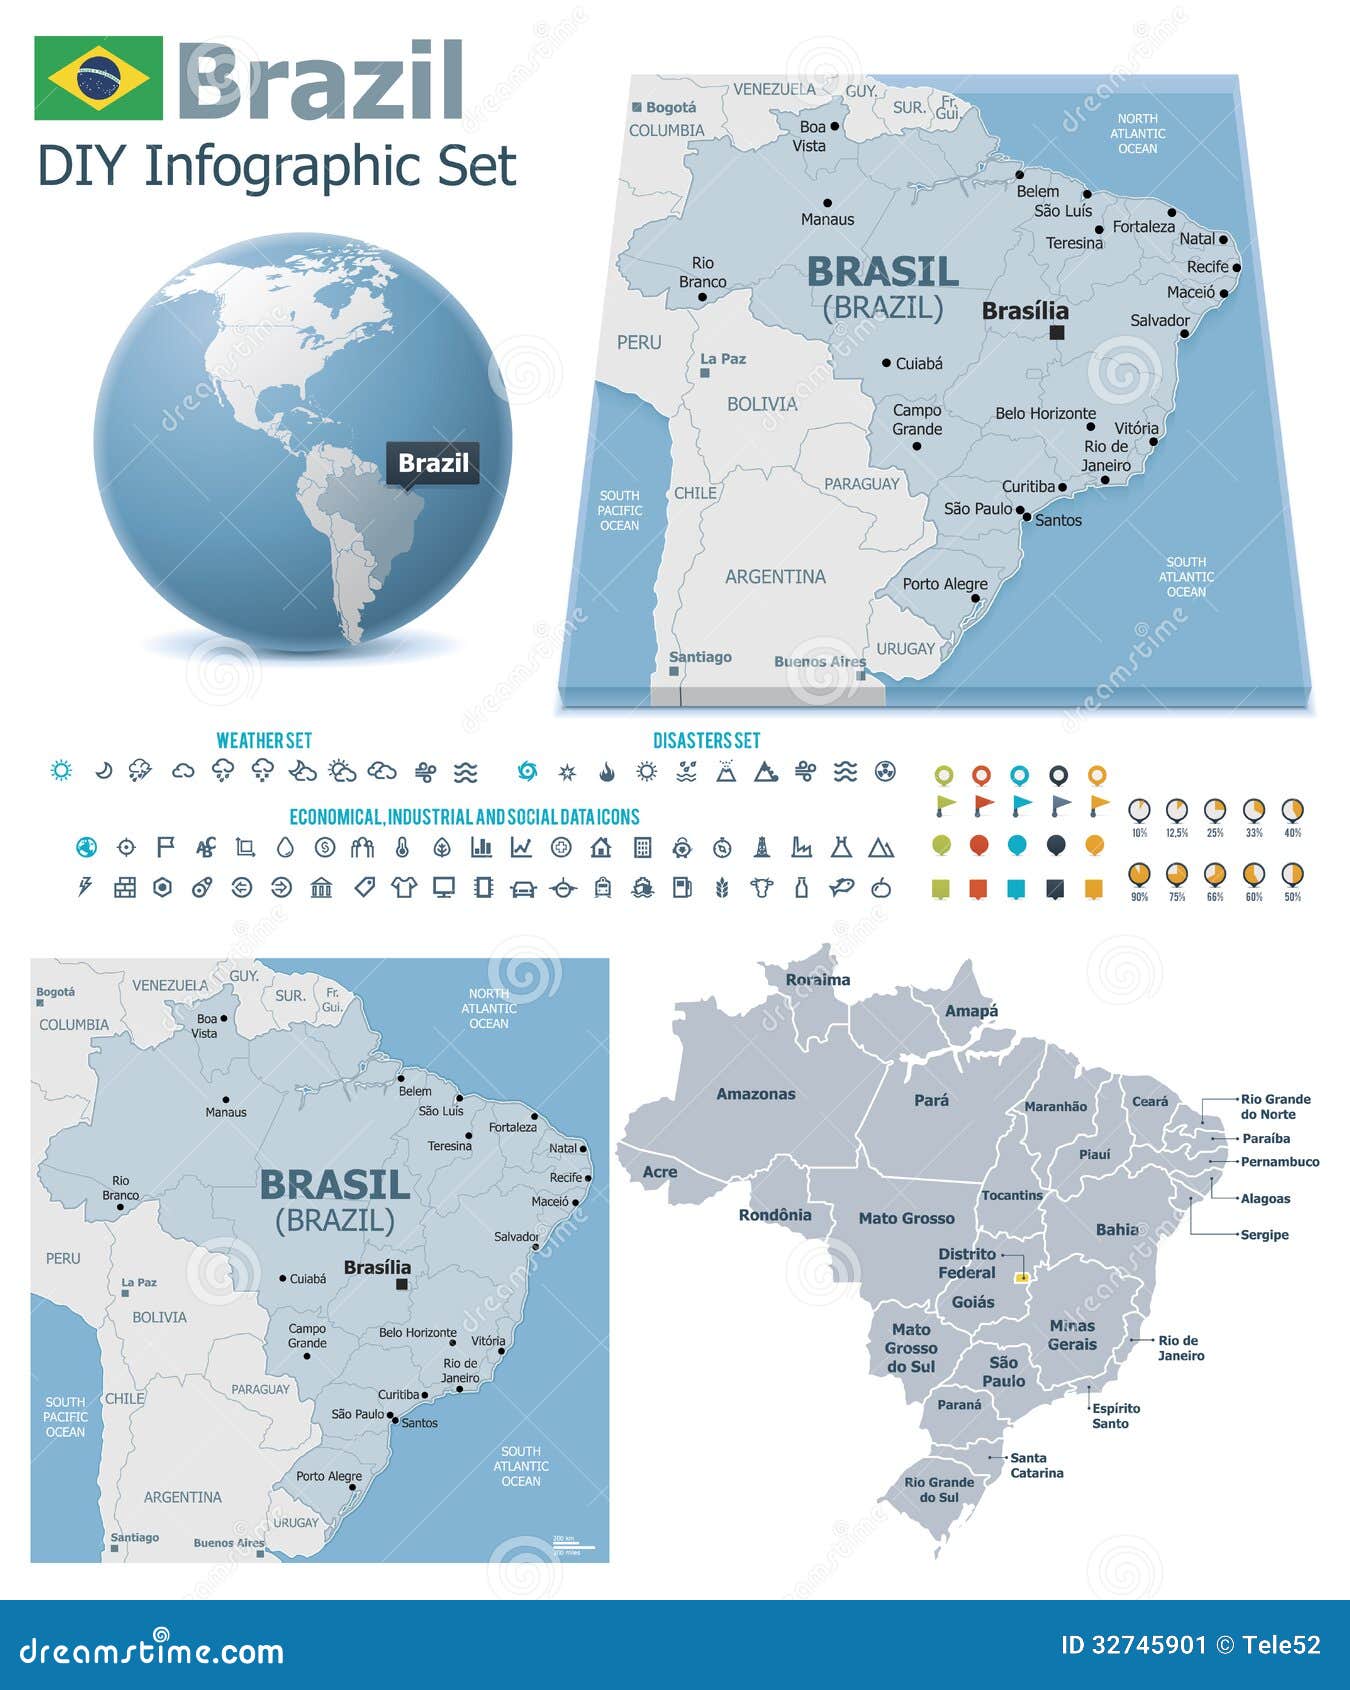 Migration Governance Snapshot: The Federative Republic of Brazil